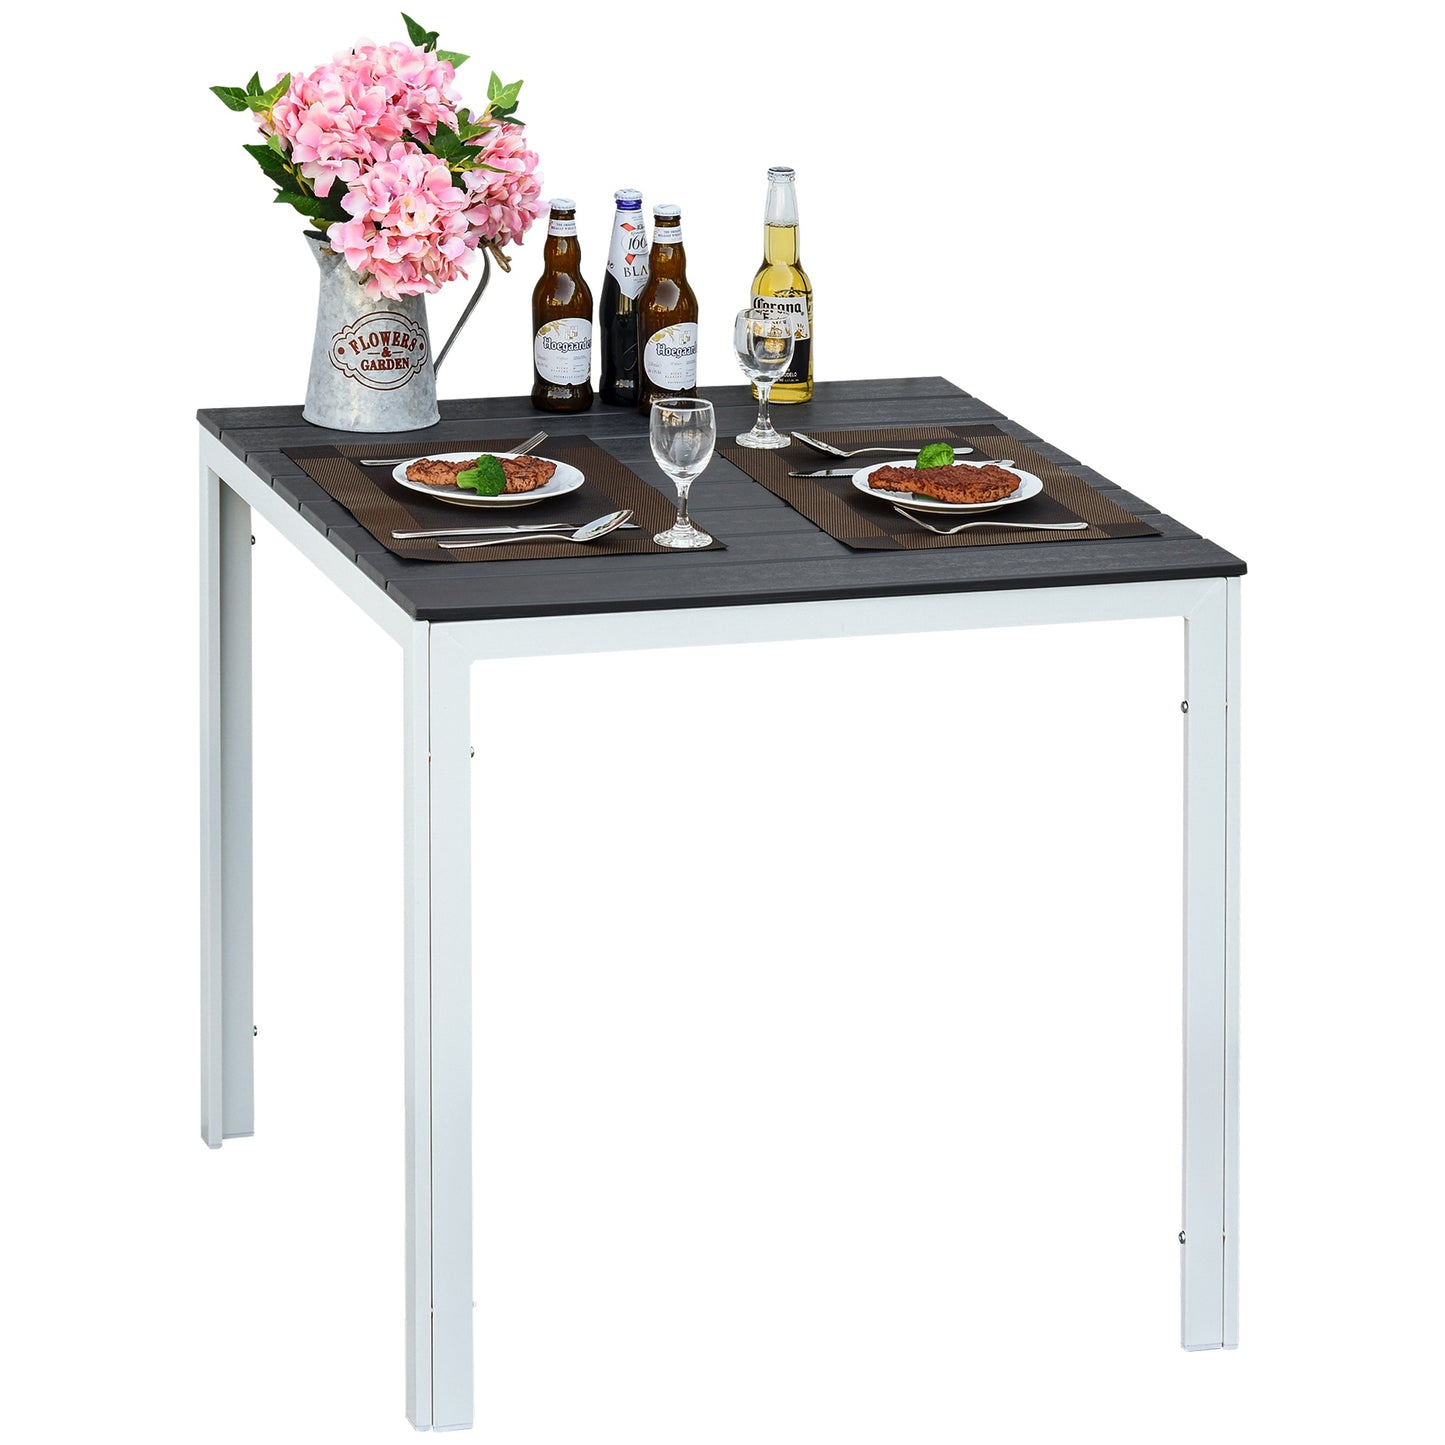 Outsunny Patio Garden Square Metal Table w/ PE Surface, for Porches, Backyards, Dark Grey